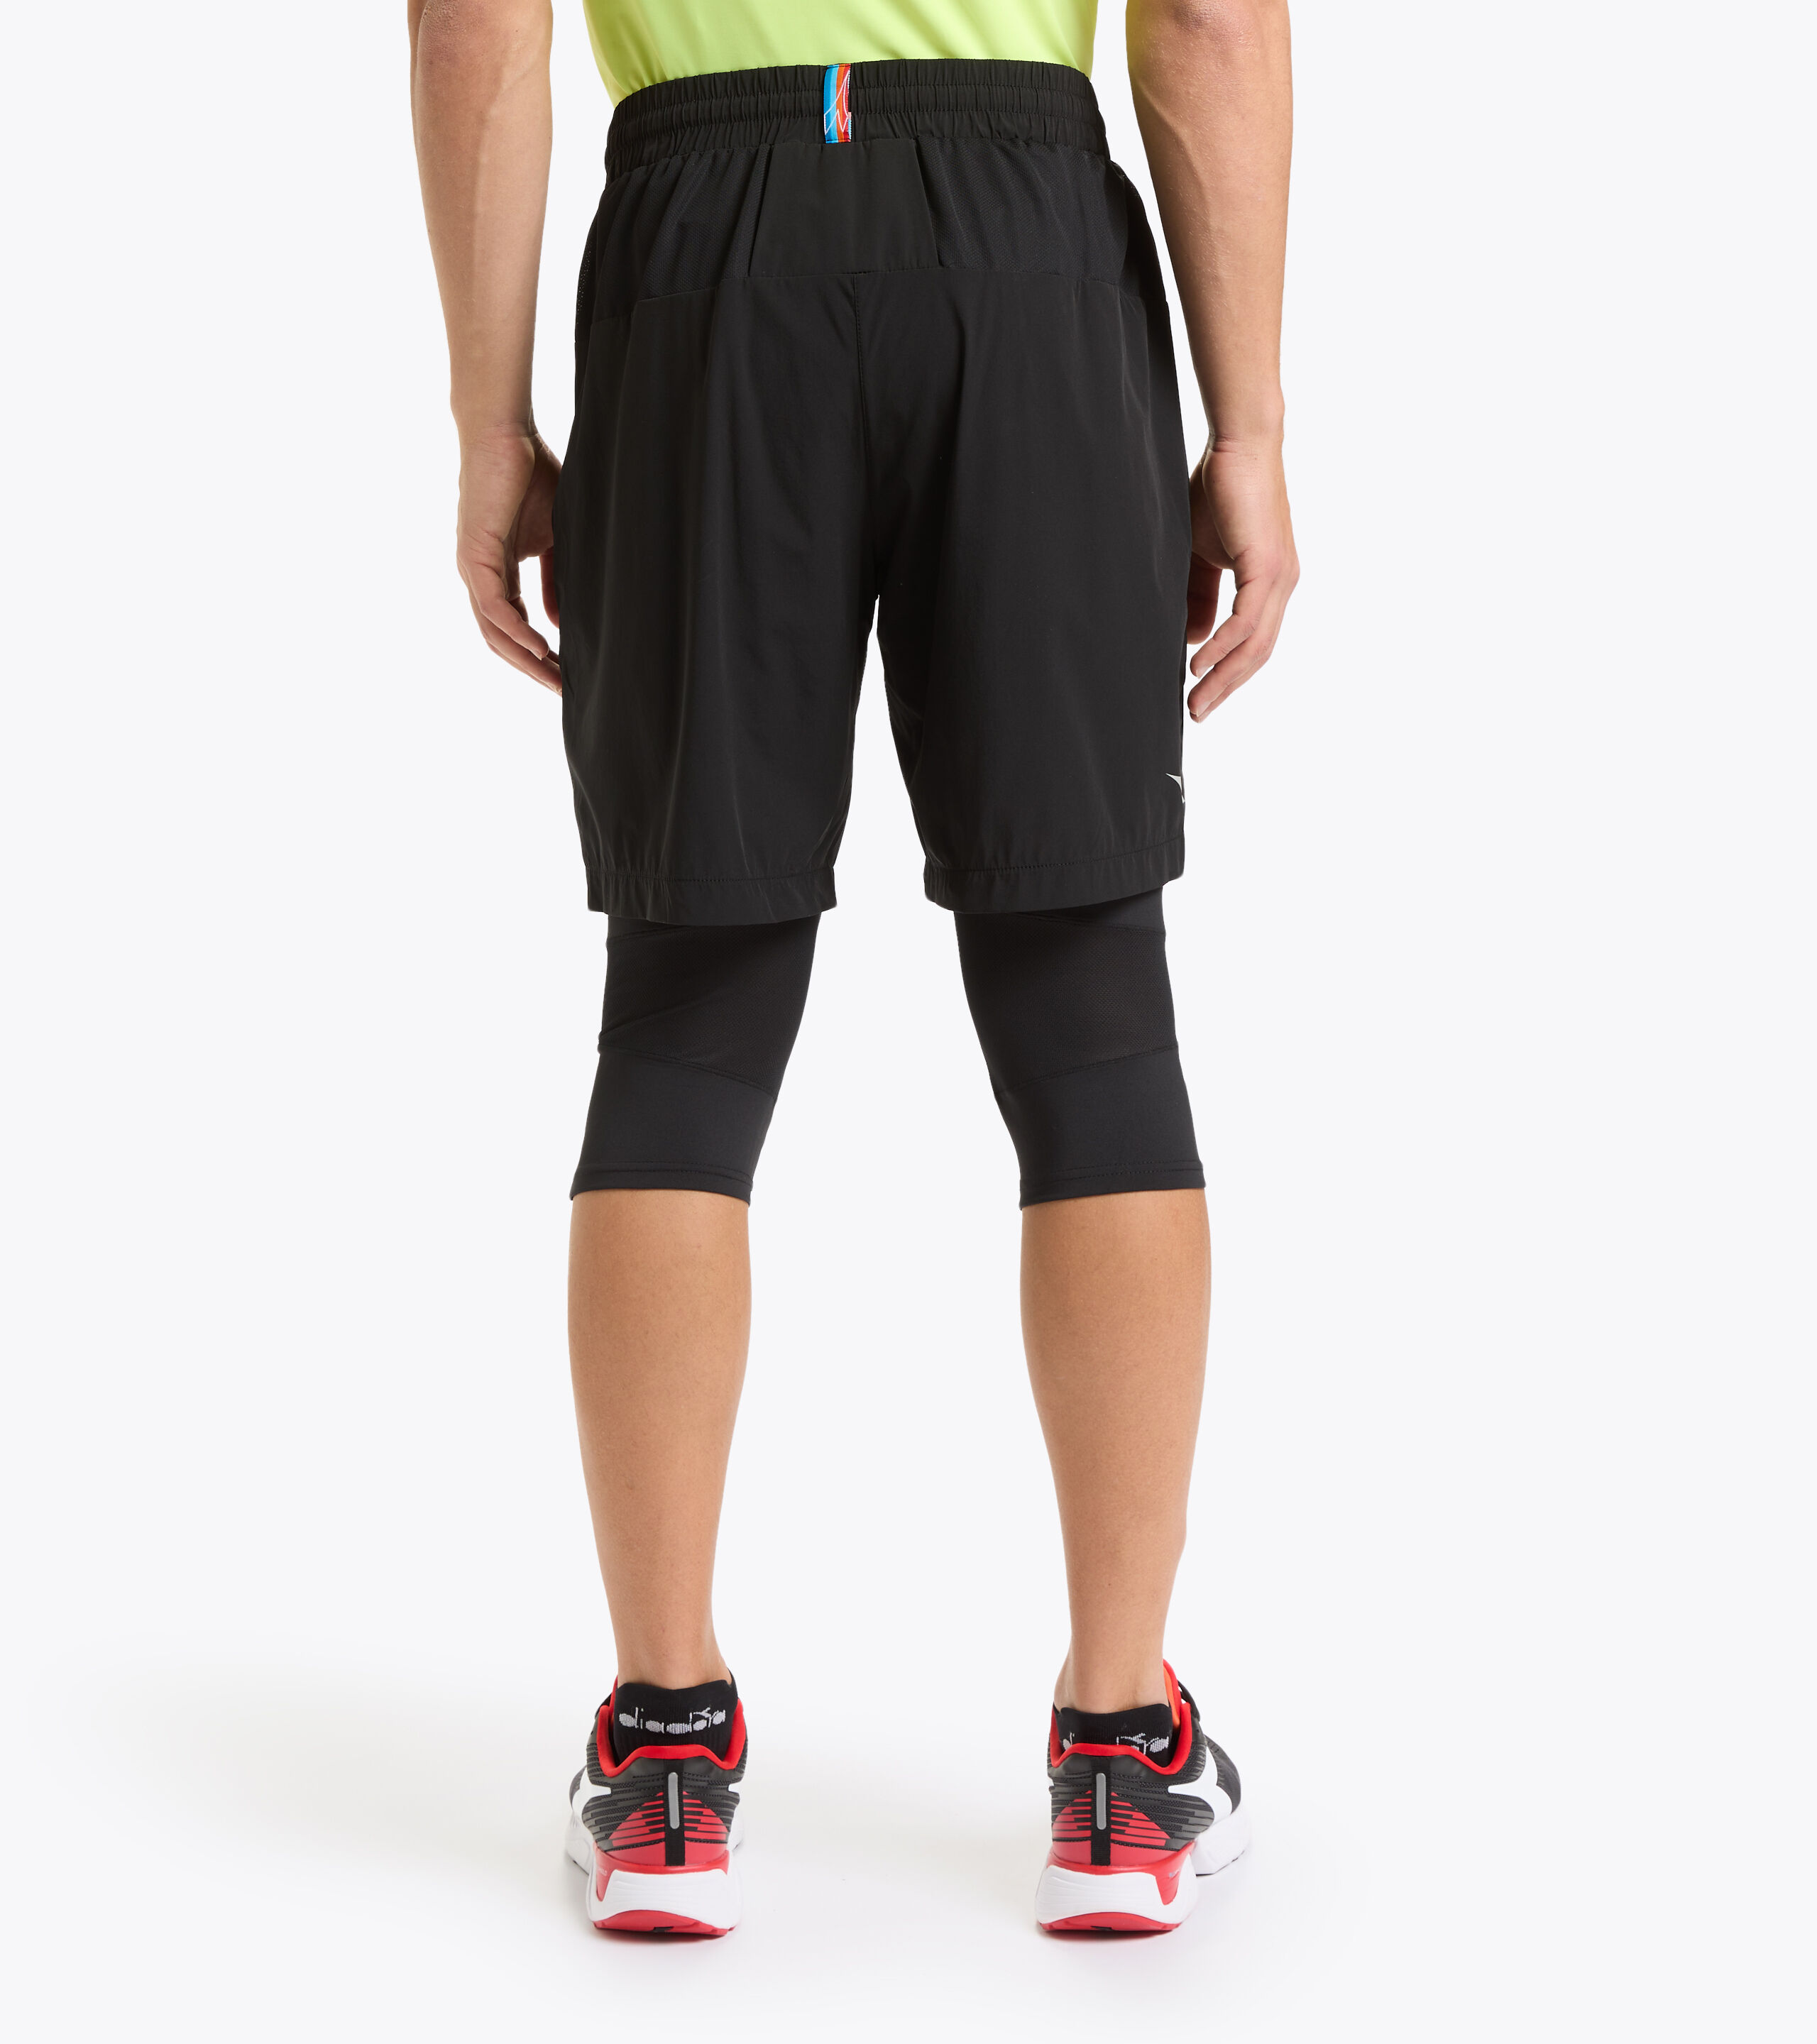 Men's 2 in 1 Sports Shorts Dry Fit Running Basketball Leggings Tights Pants  - Black - CY18NHIDCUI Size Medium | Basketball leggings, Mens running  clothes, Mens leggings fashion